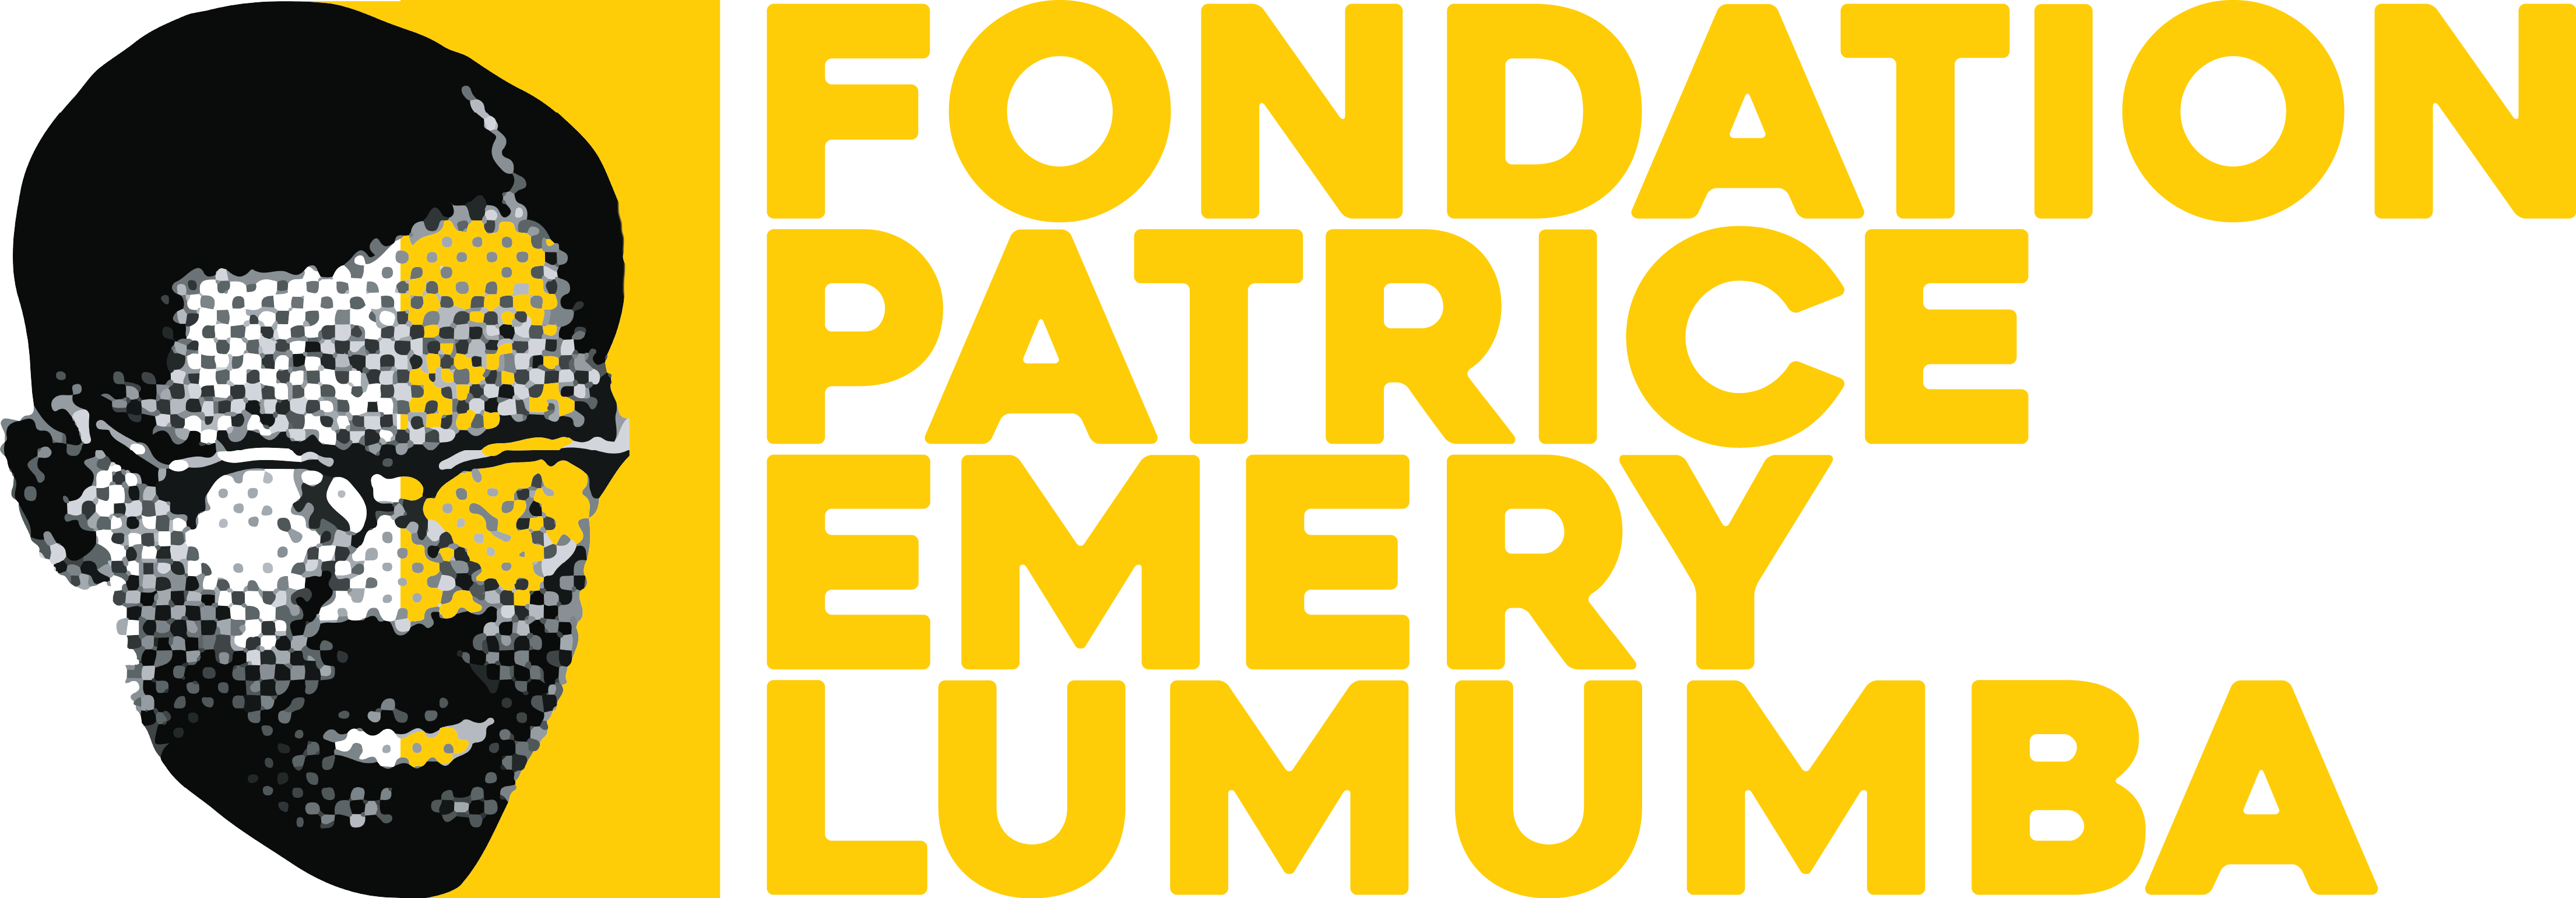 Fondation Patrice Emery Lumumba